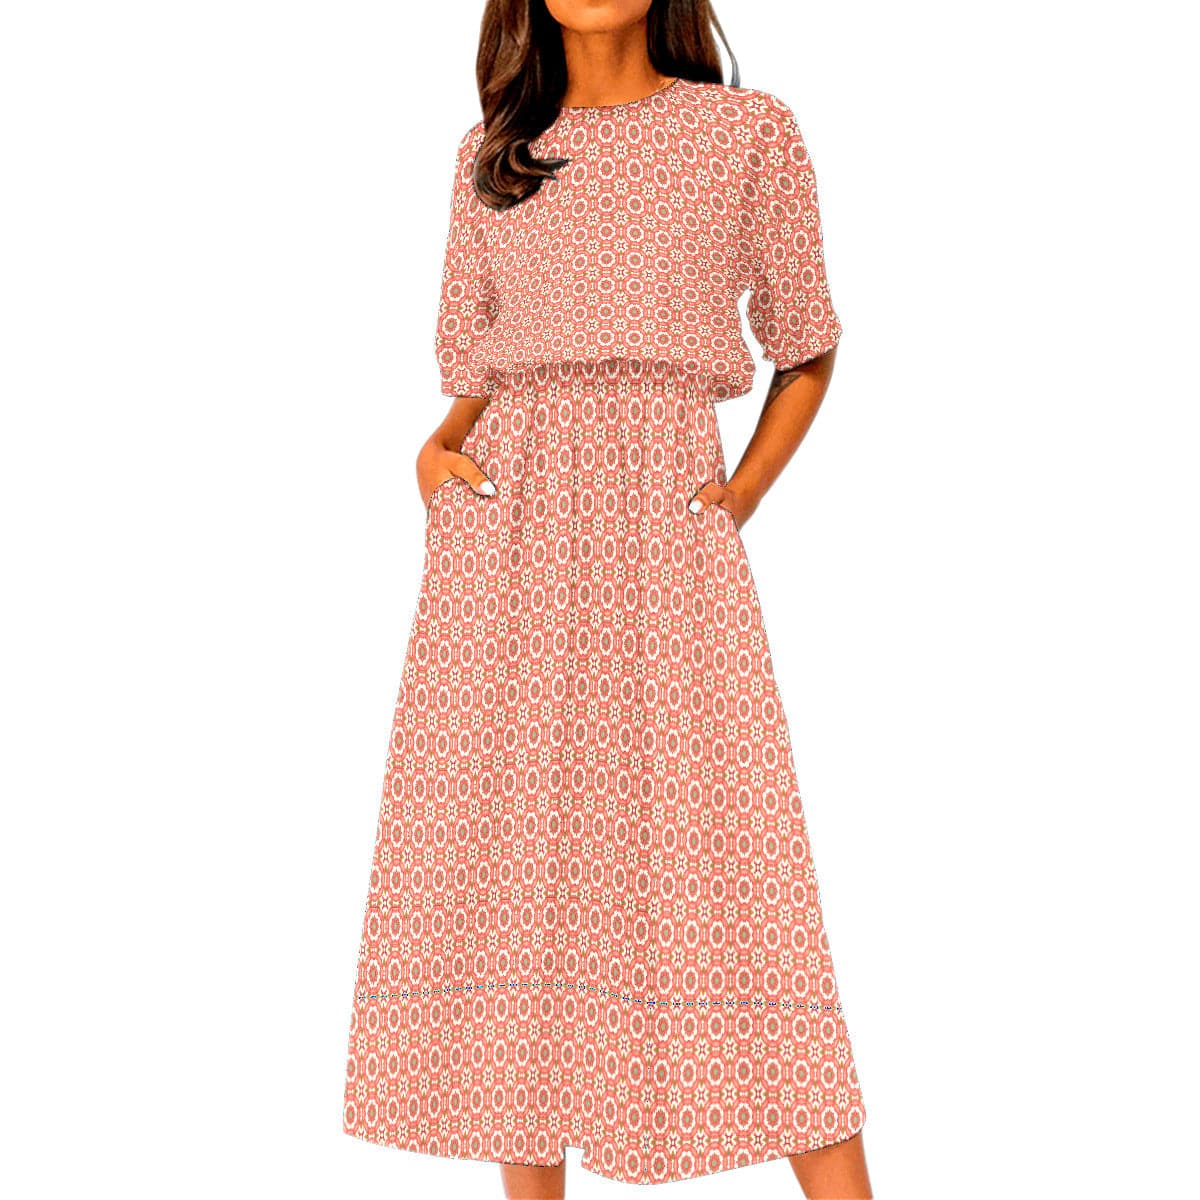 Trendy Pink patterned Women's Elastic Waist Dress, by Sensus Studio Design